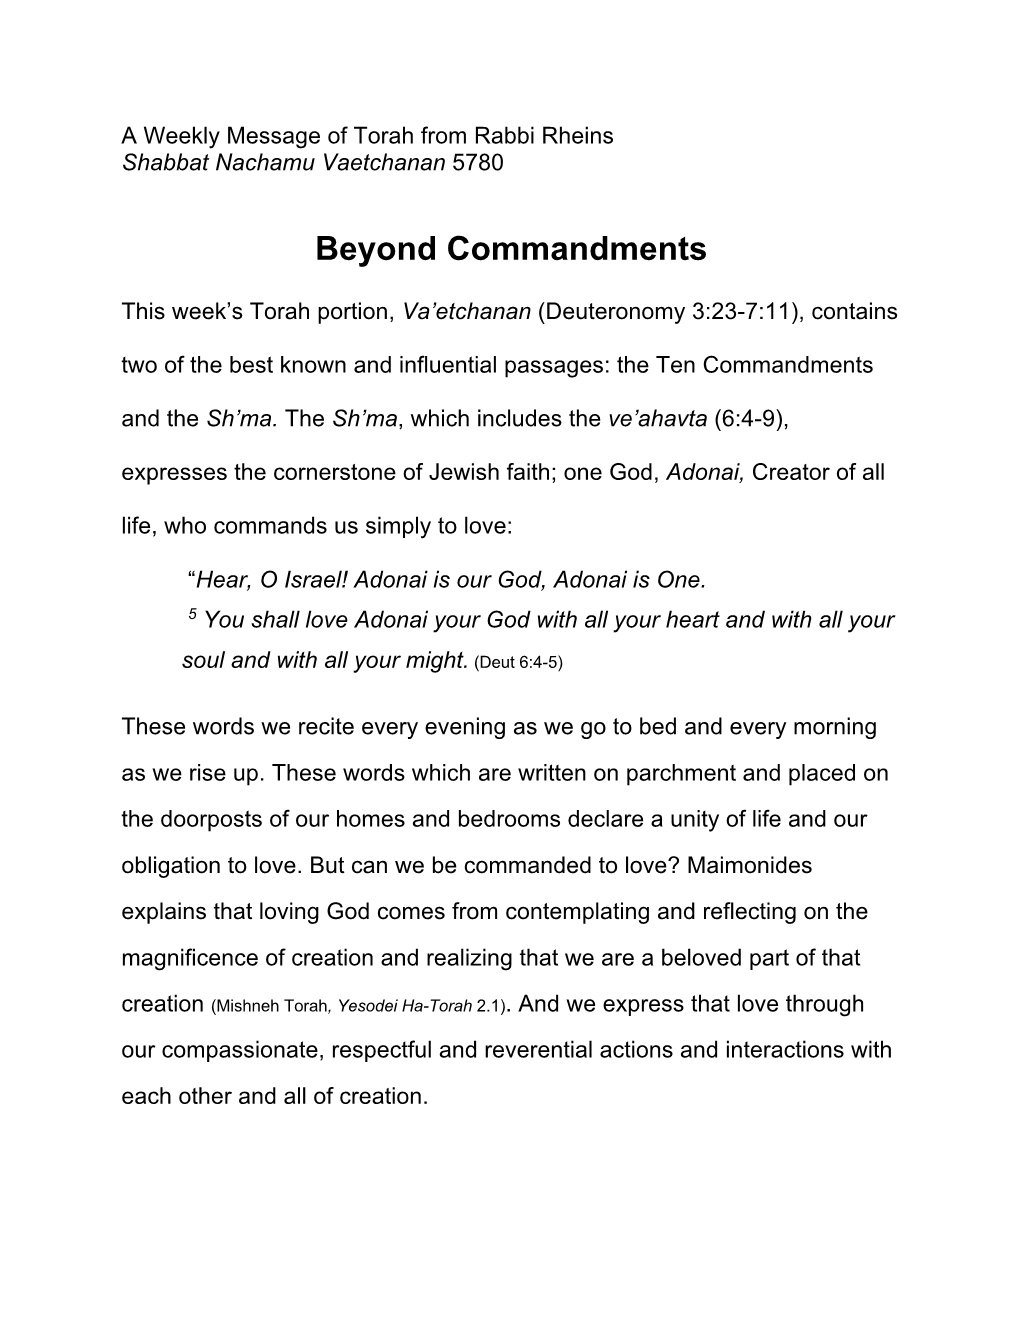 Beyond Commandments